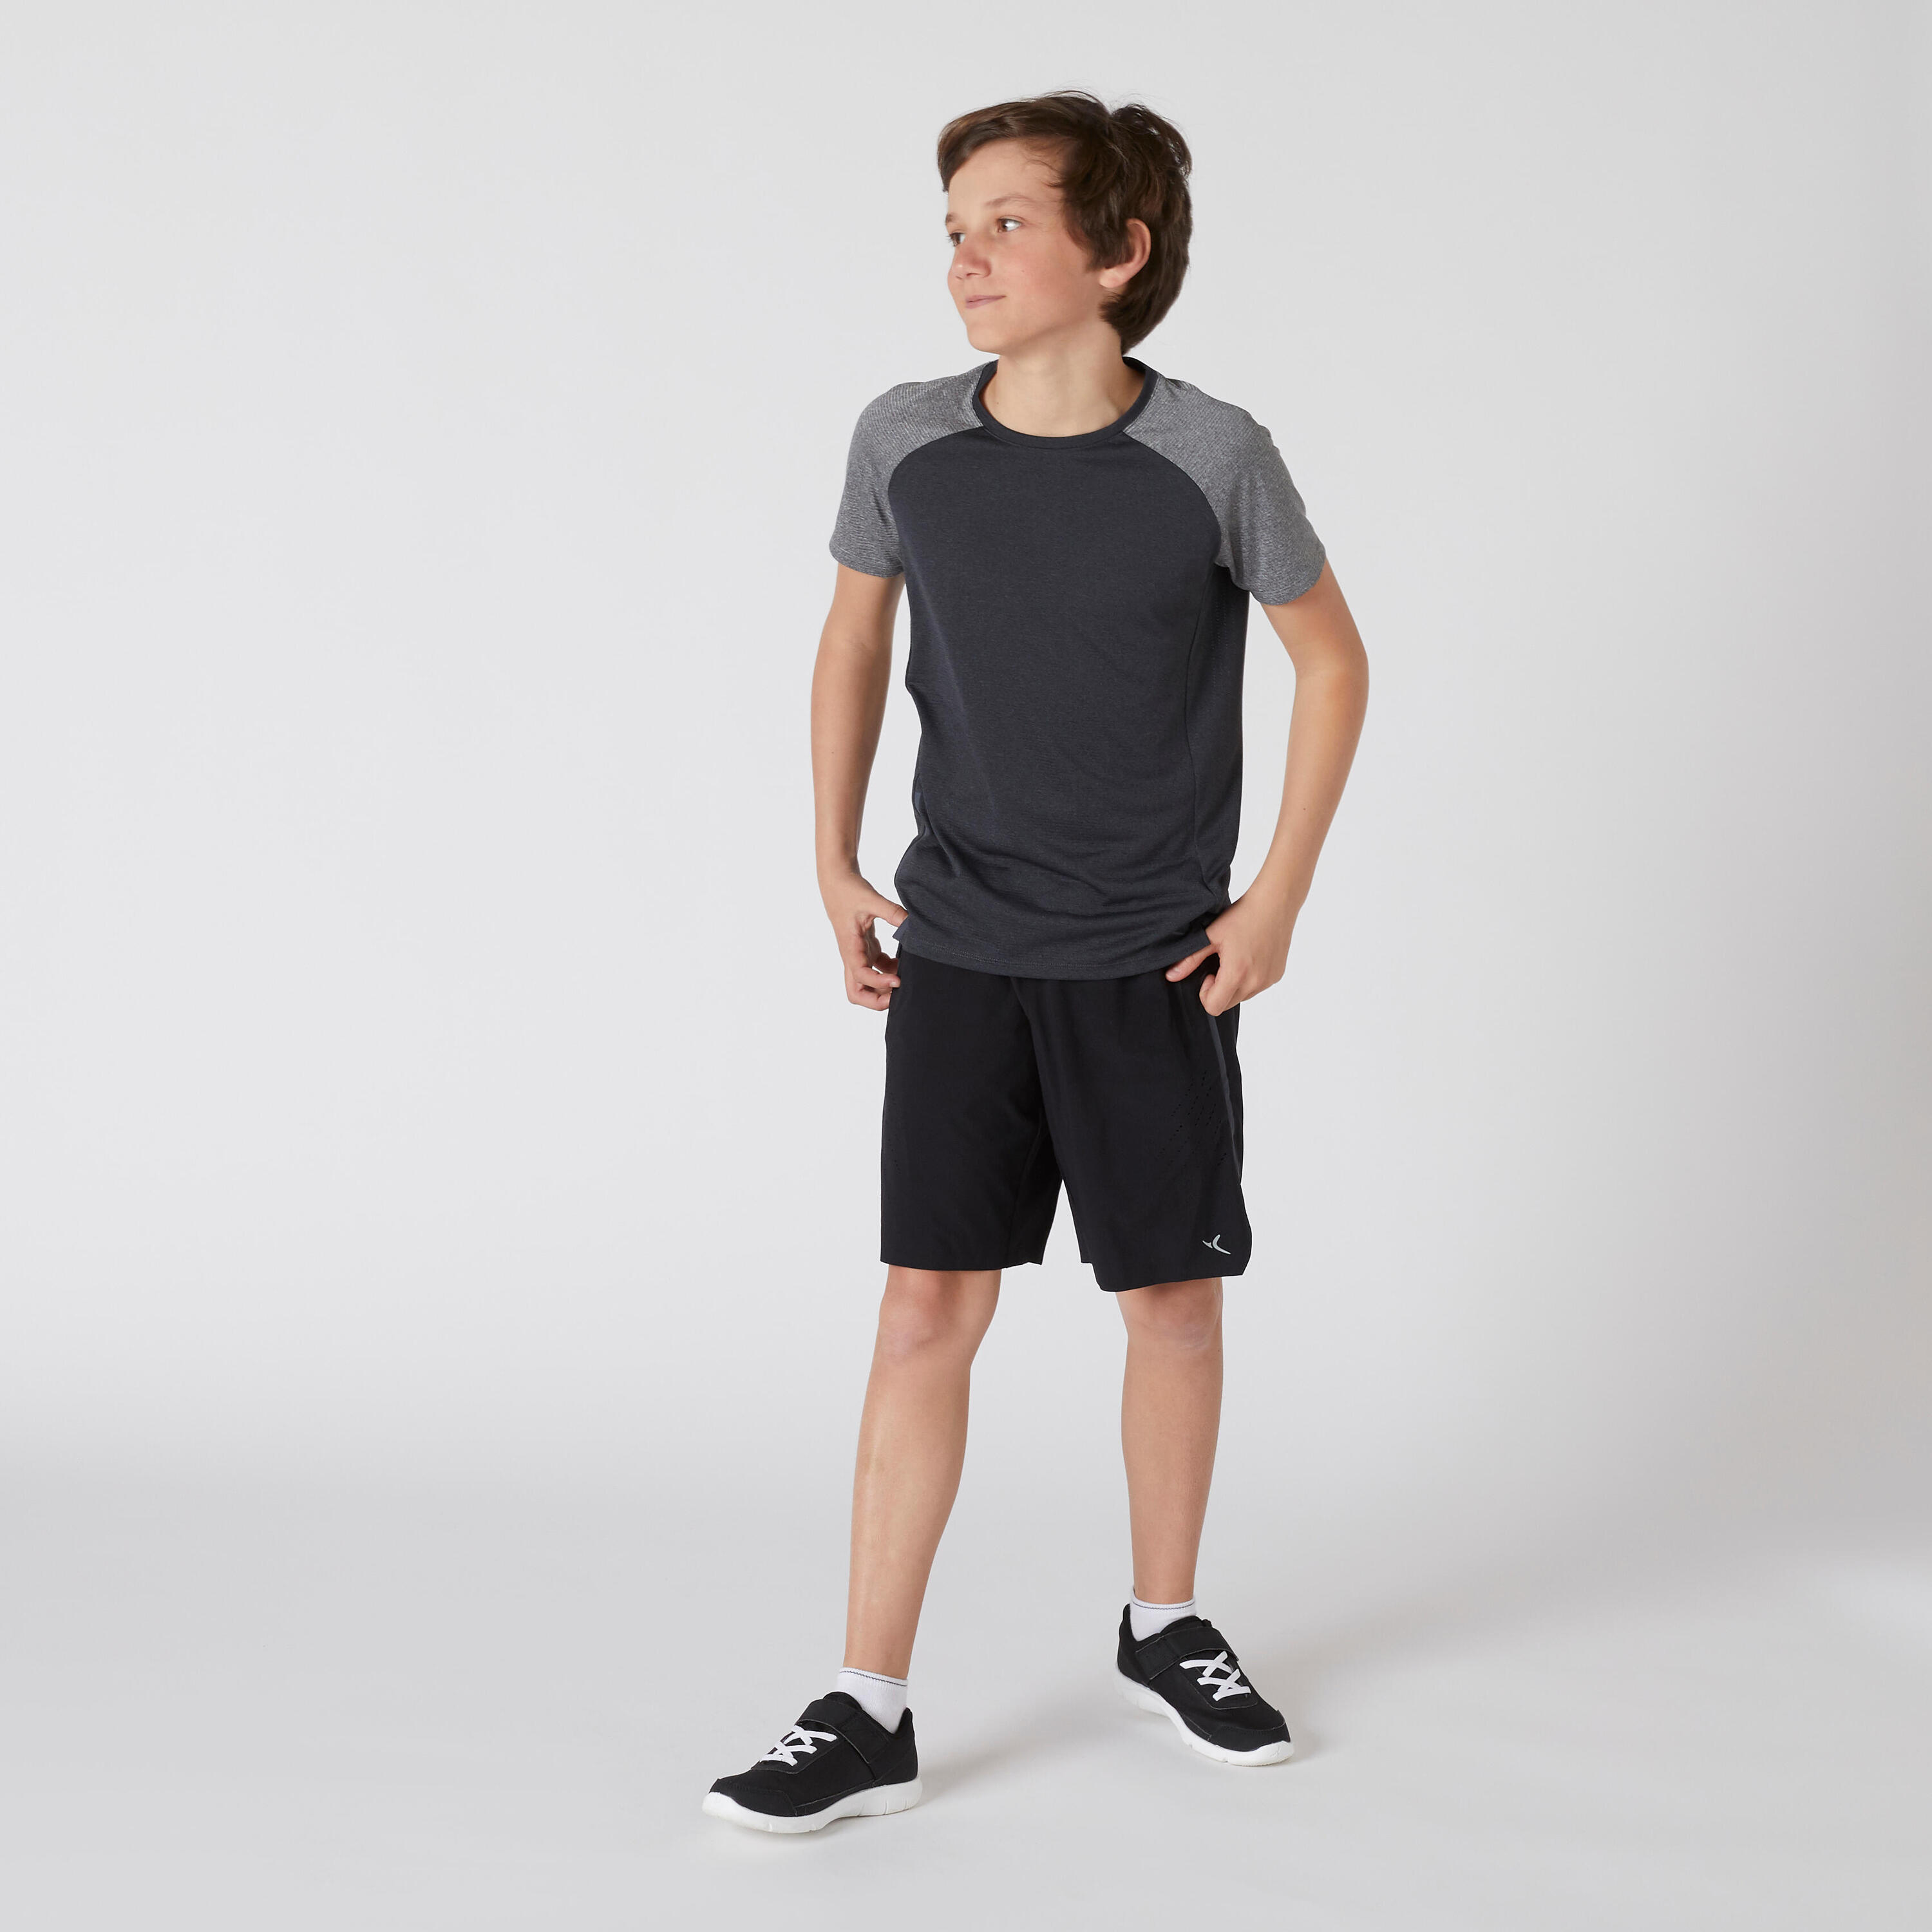 Kids' Technical Breathable T-Shirt S580 - Black 6/6